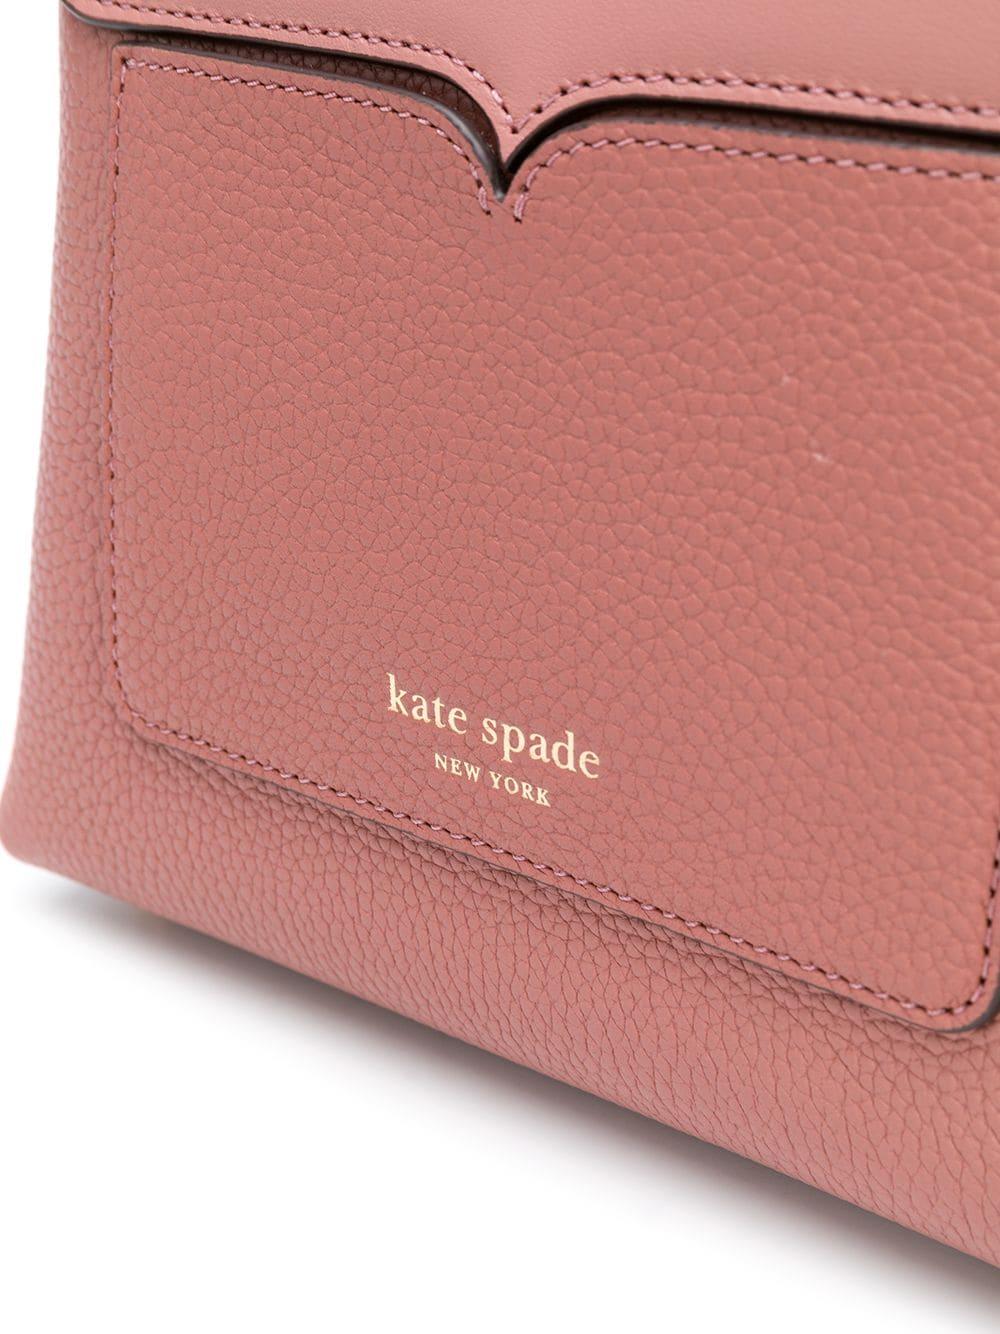 Kate Spade Romy Leather Mini Top Handle Satchel in Pink - Lyst